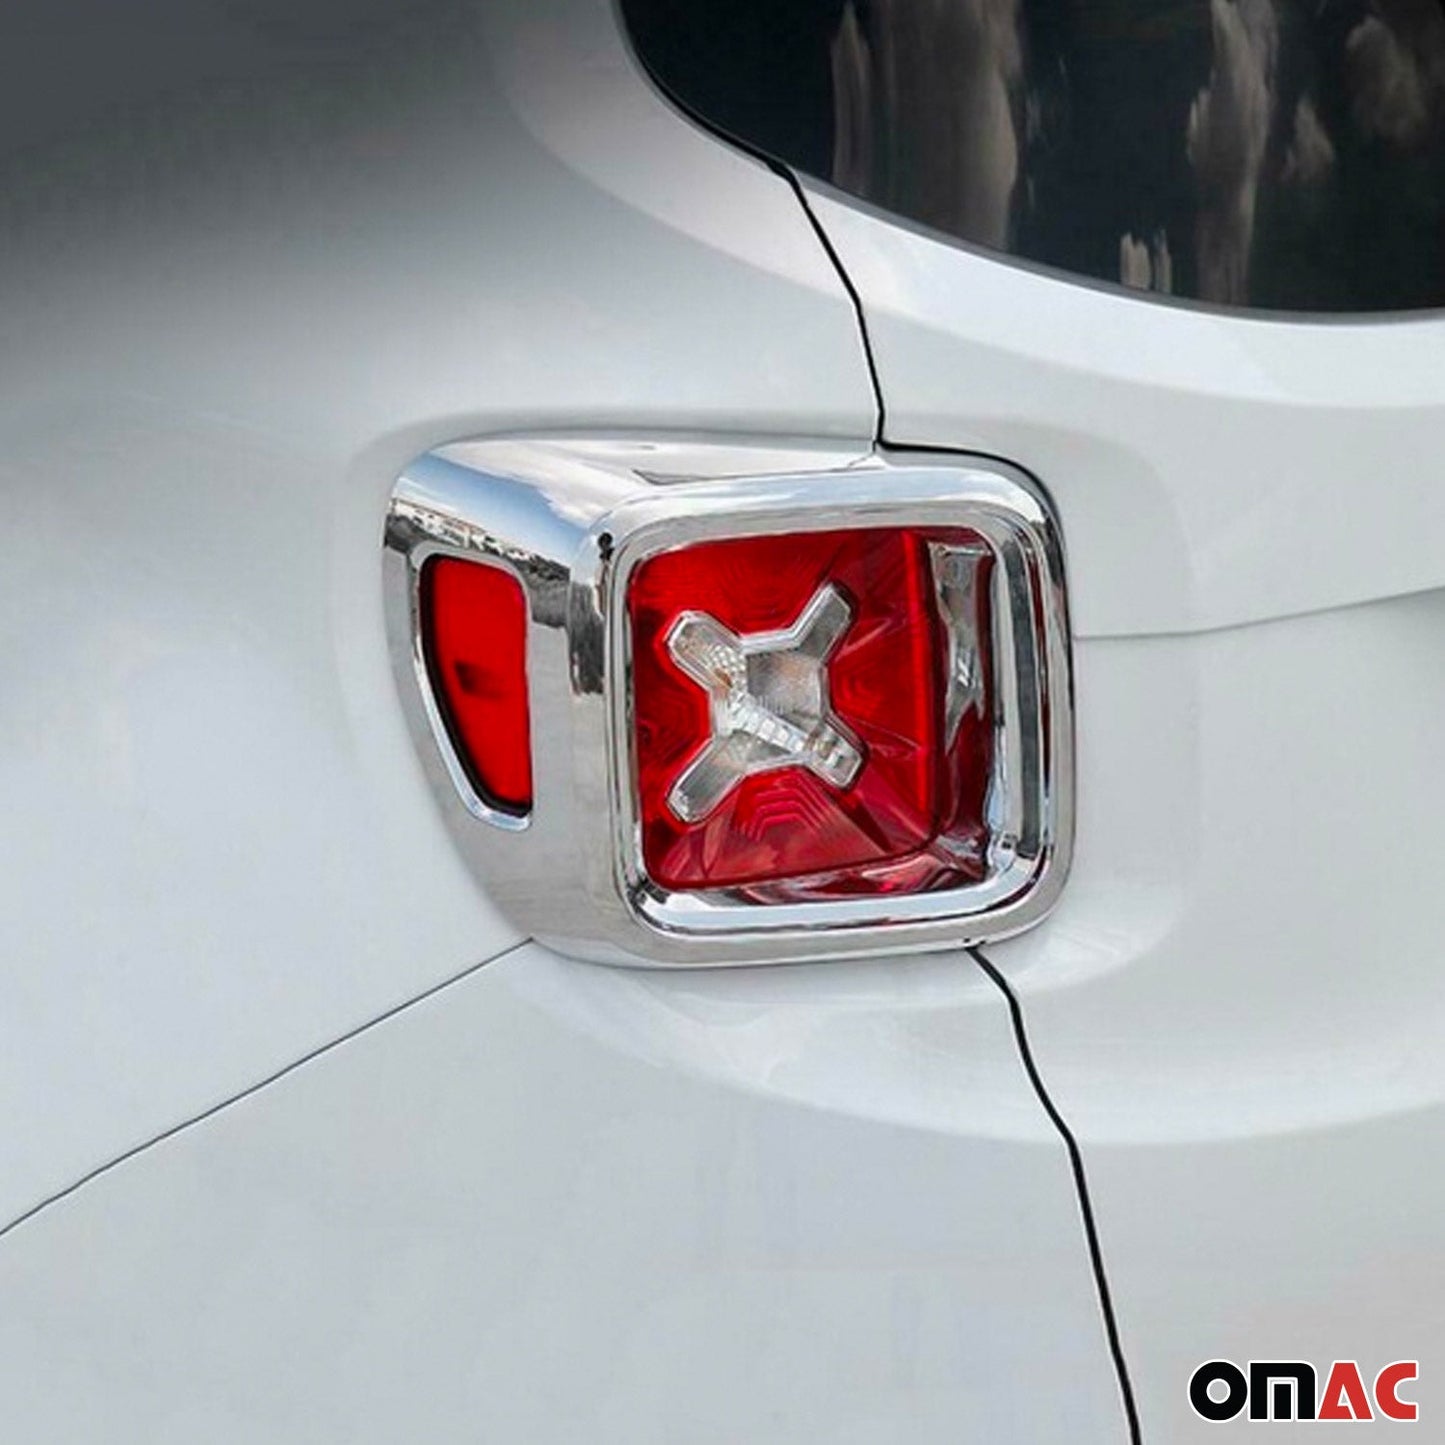 OMAC Trunk Tail Light Trim Frame for Jeep Renegade 2015-2018 Chrome Silver 2 Pcs 1708101